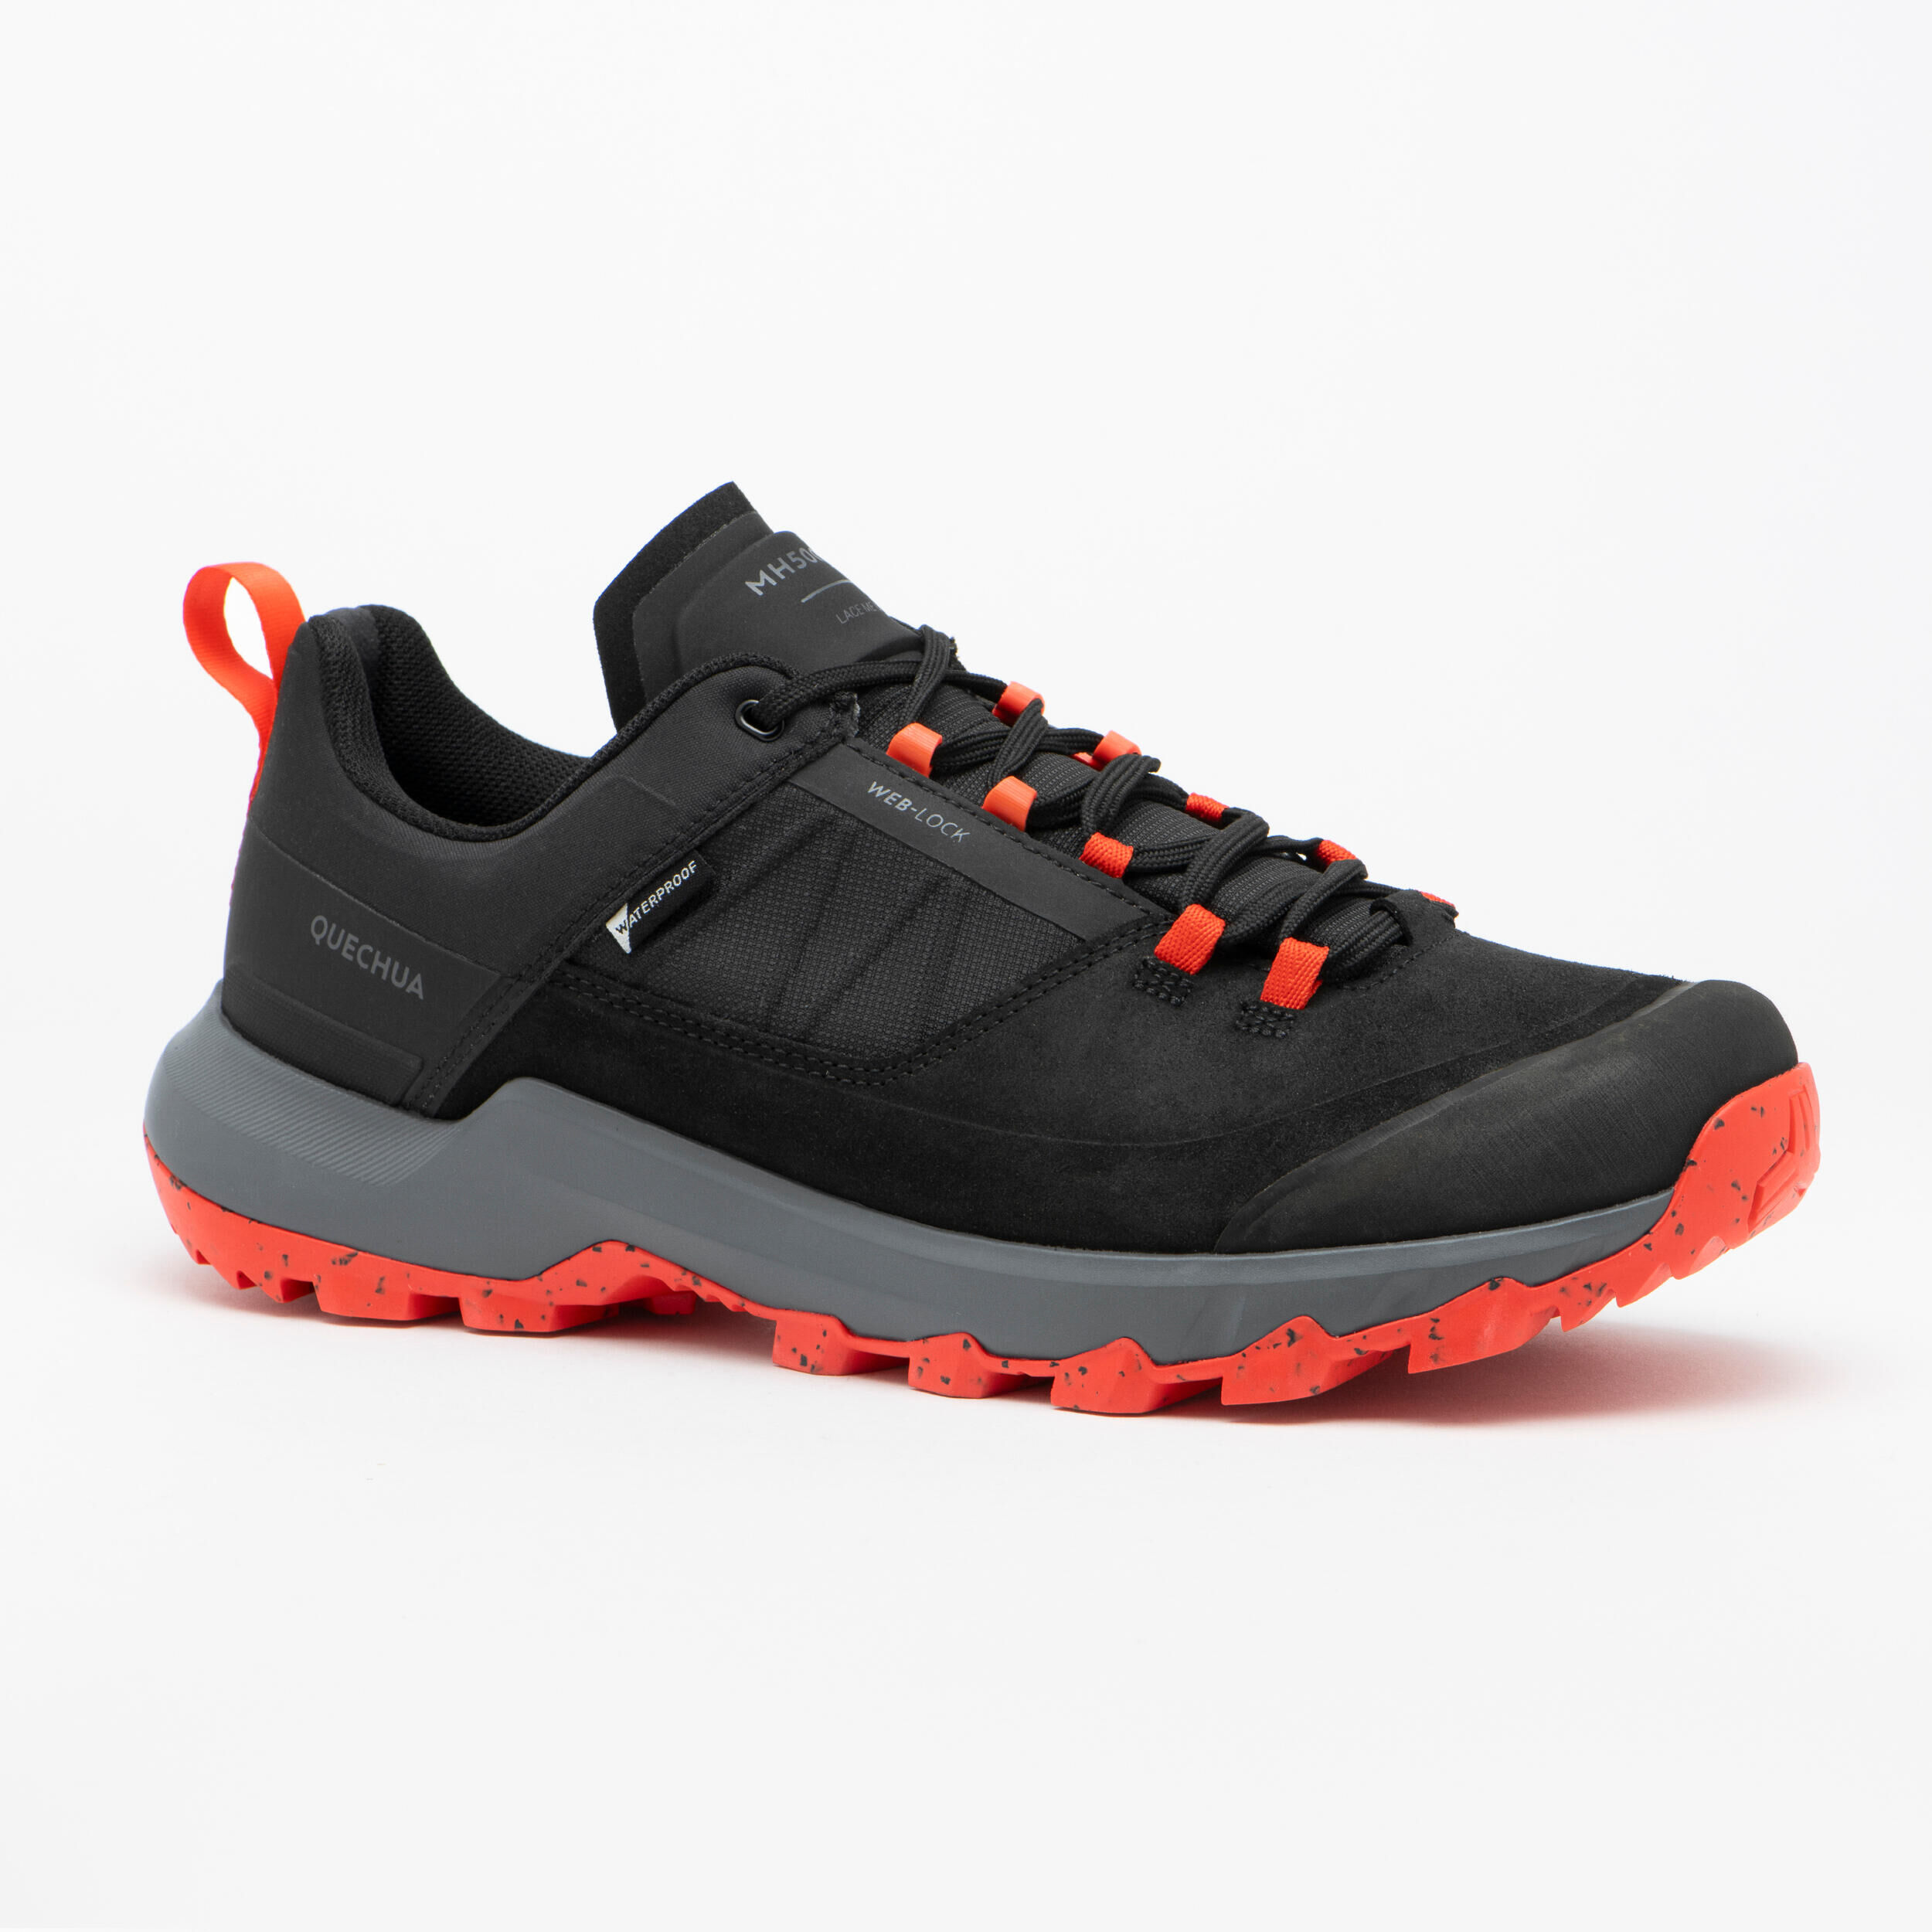 QUECHUA Men's waterproof hiking shoes - MH500 black